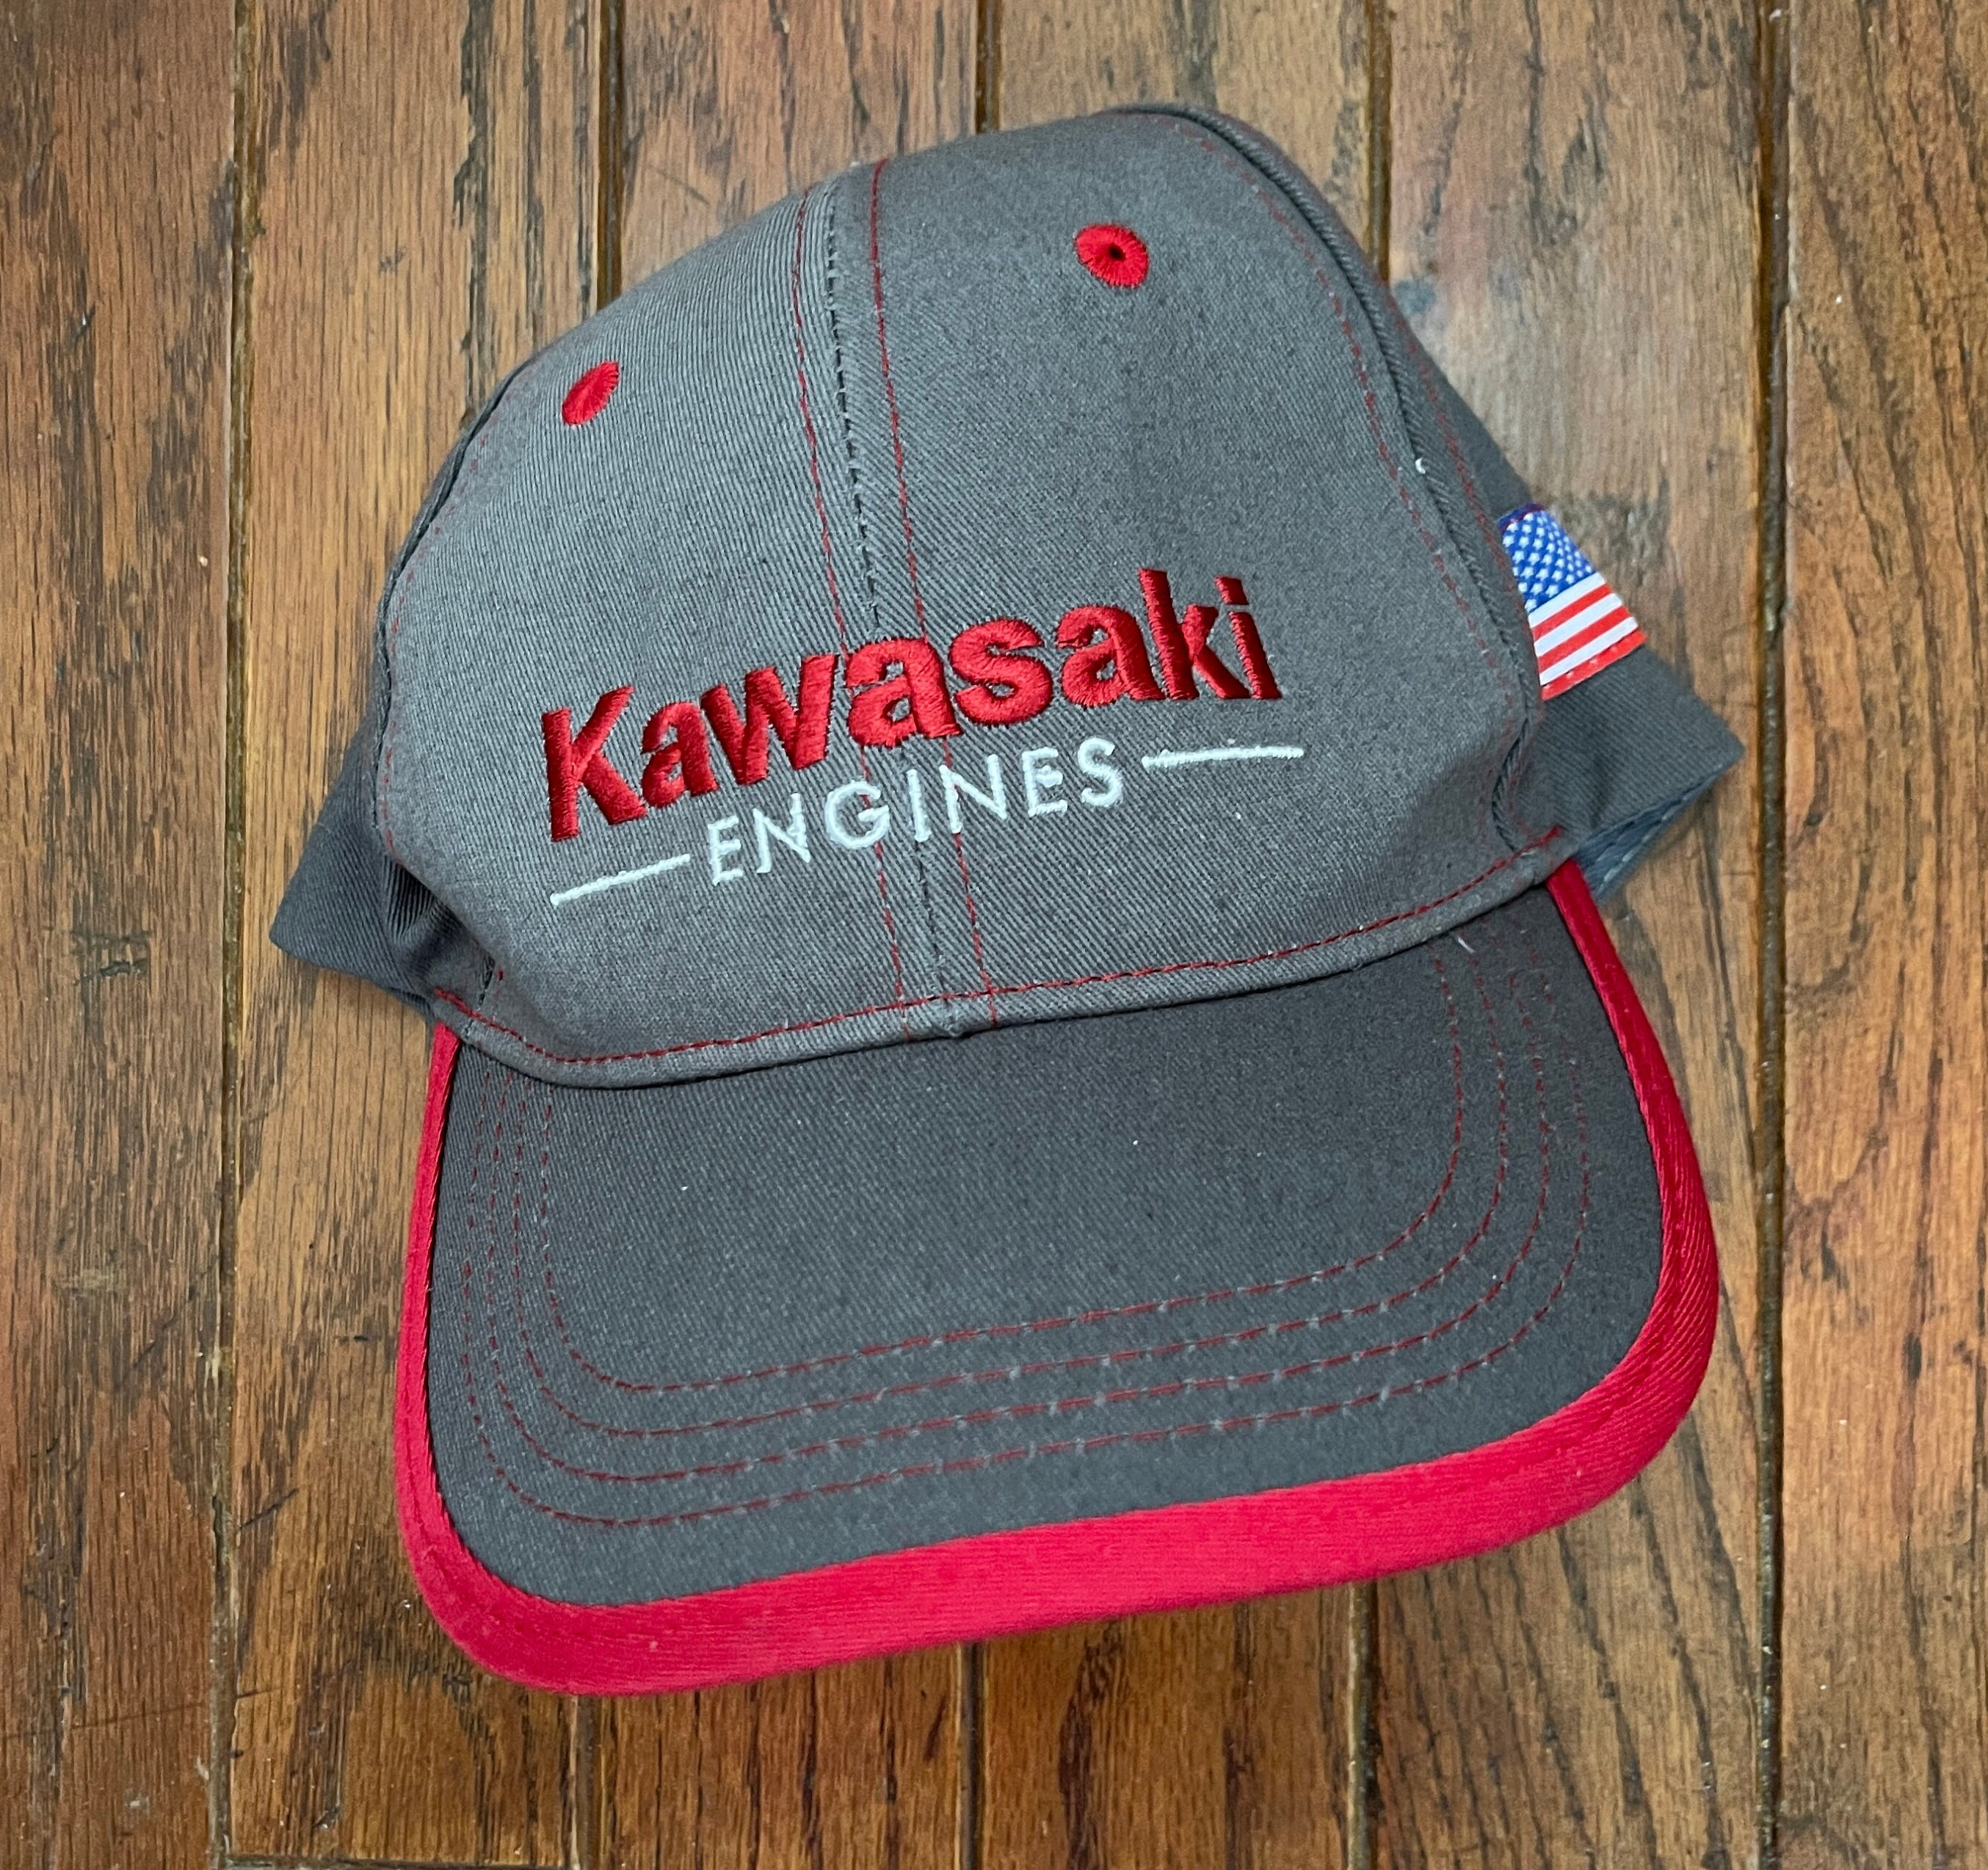 Buy Vintage Kawasaki Hat Online In India - Etsy India